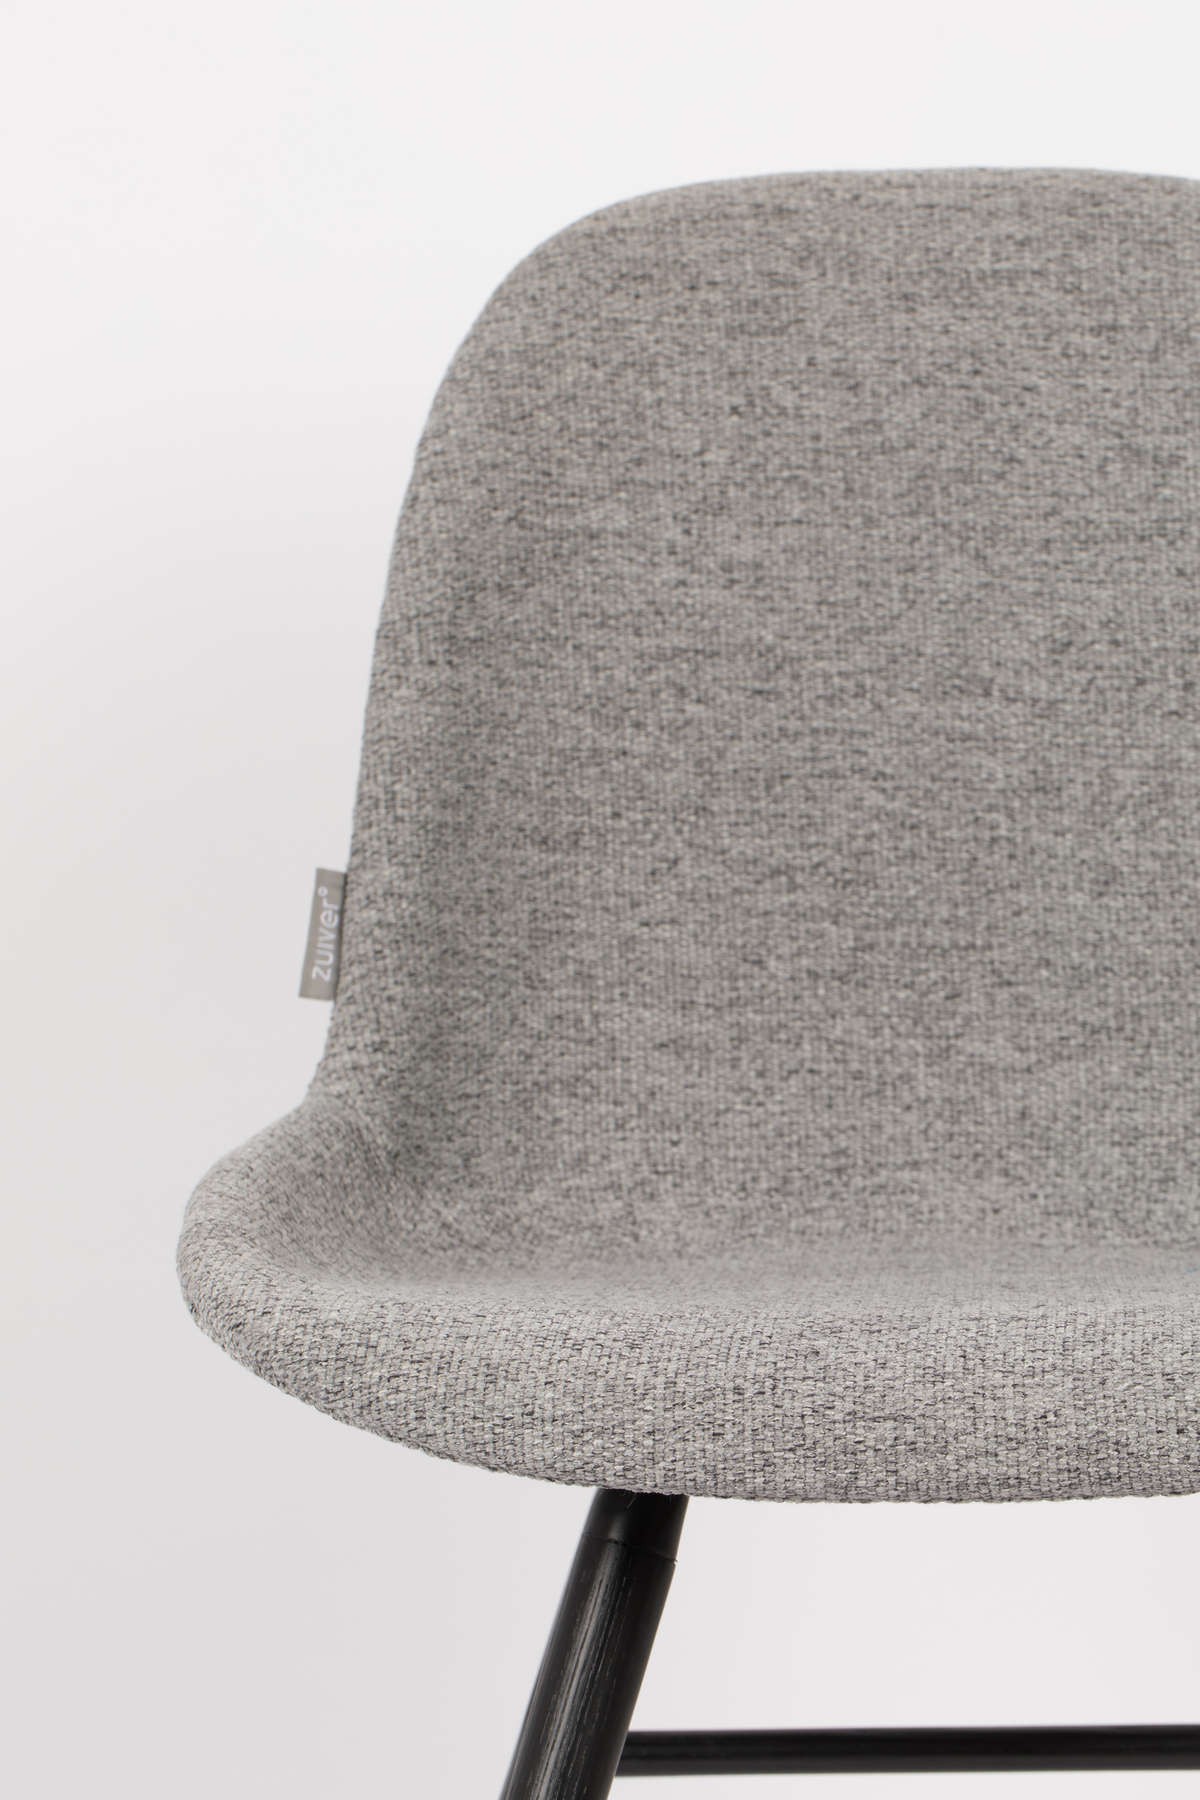 Krzesło Albert Kuip Soft, szare